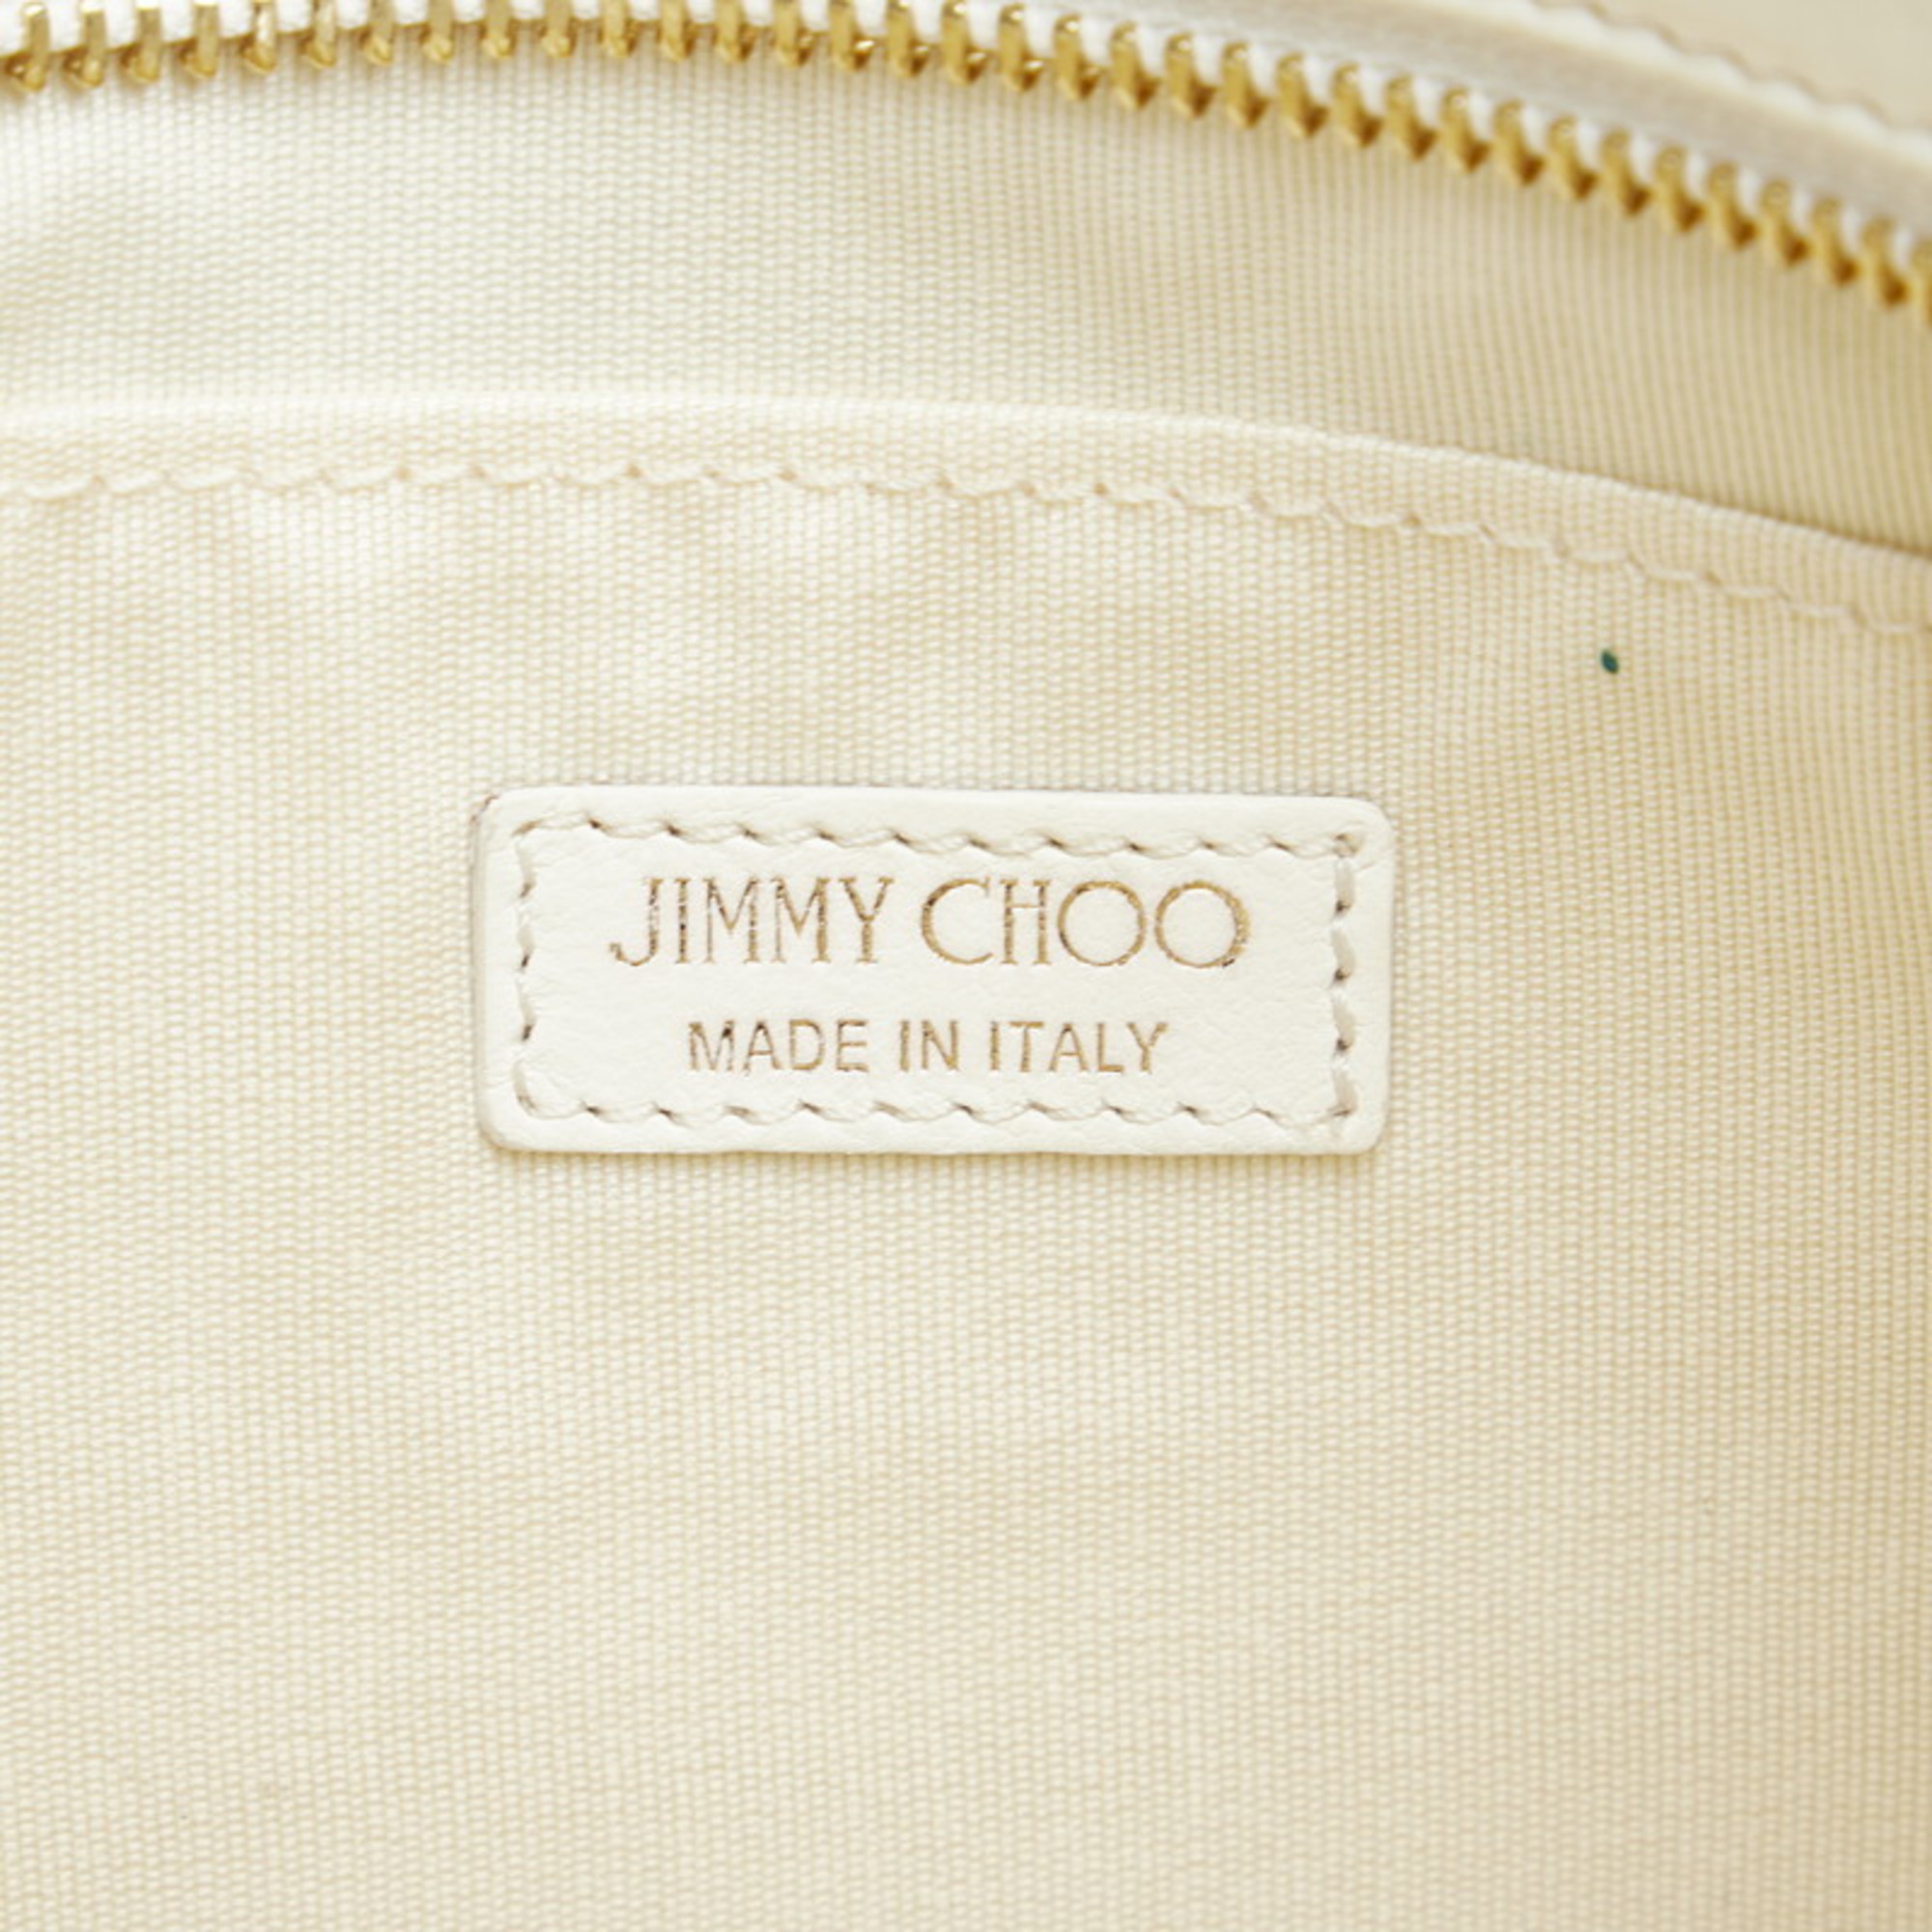 Jimmy Choo Zena Star Studs Clutch Bag Second White Red Leather Ladies JIMMY CHOO